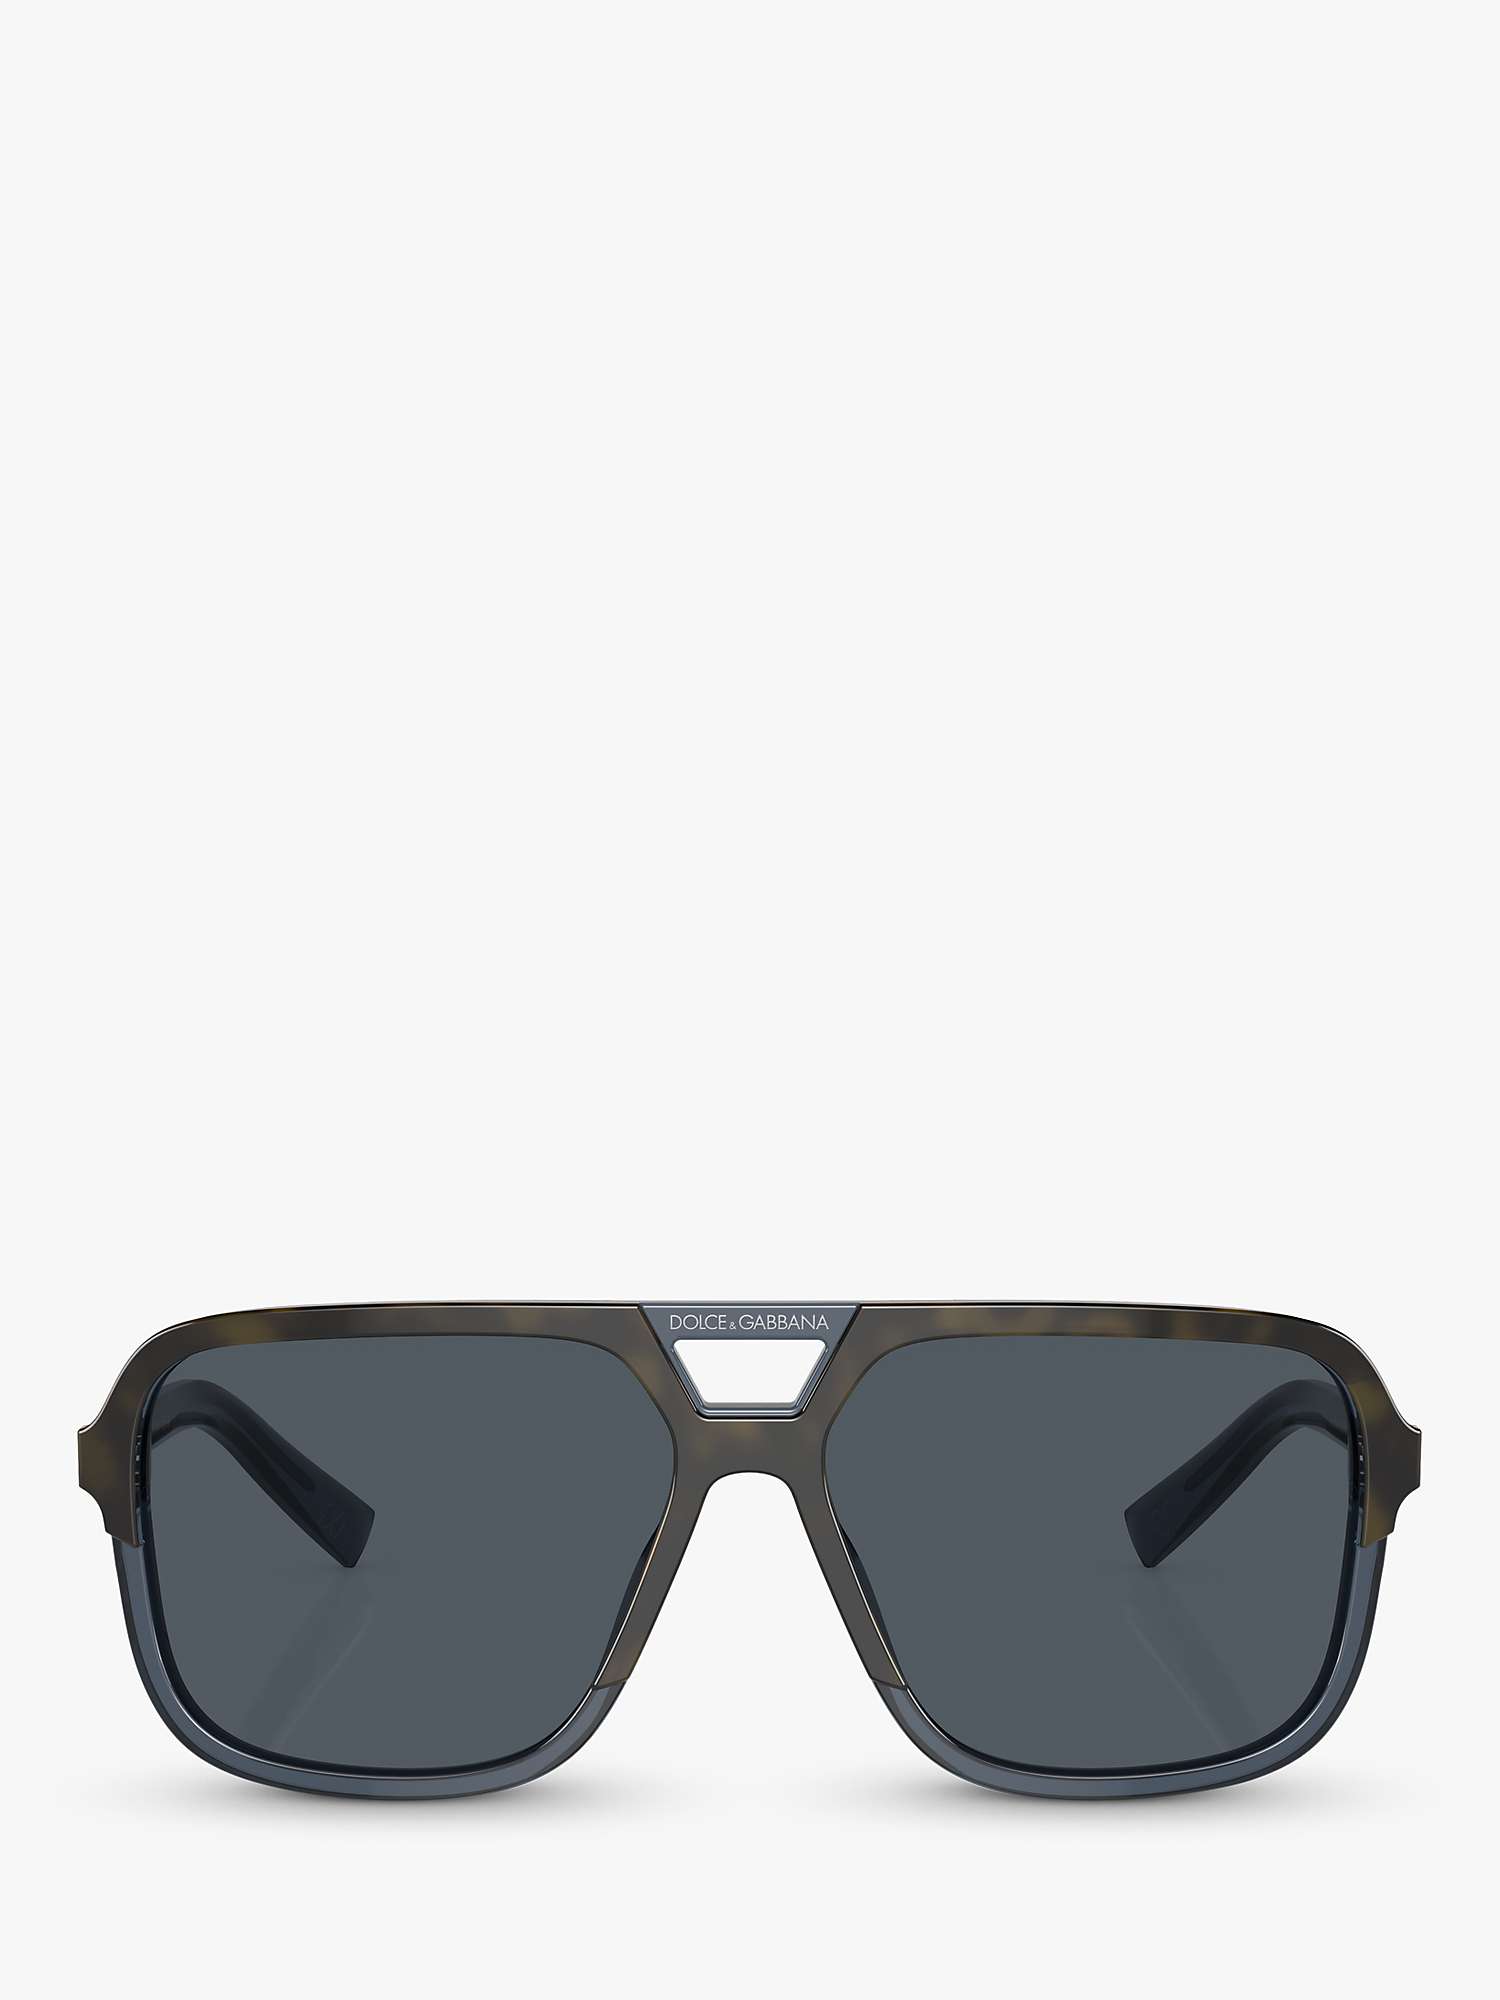 Buy Dolce & Gabbana DG4354 Men's Square Sunglasses, Brown/Blue Online at johnlewis.com